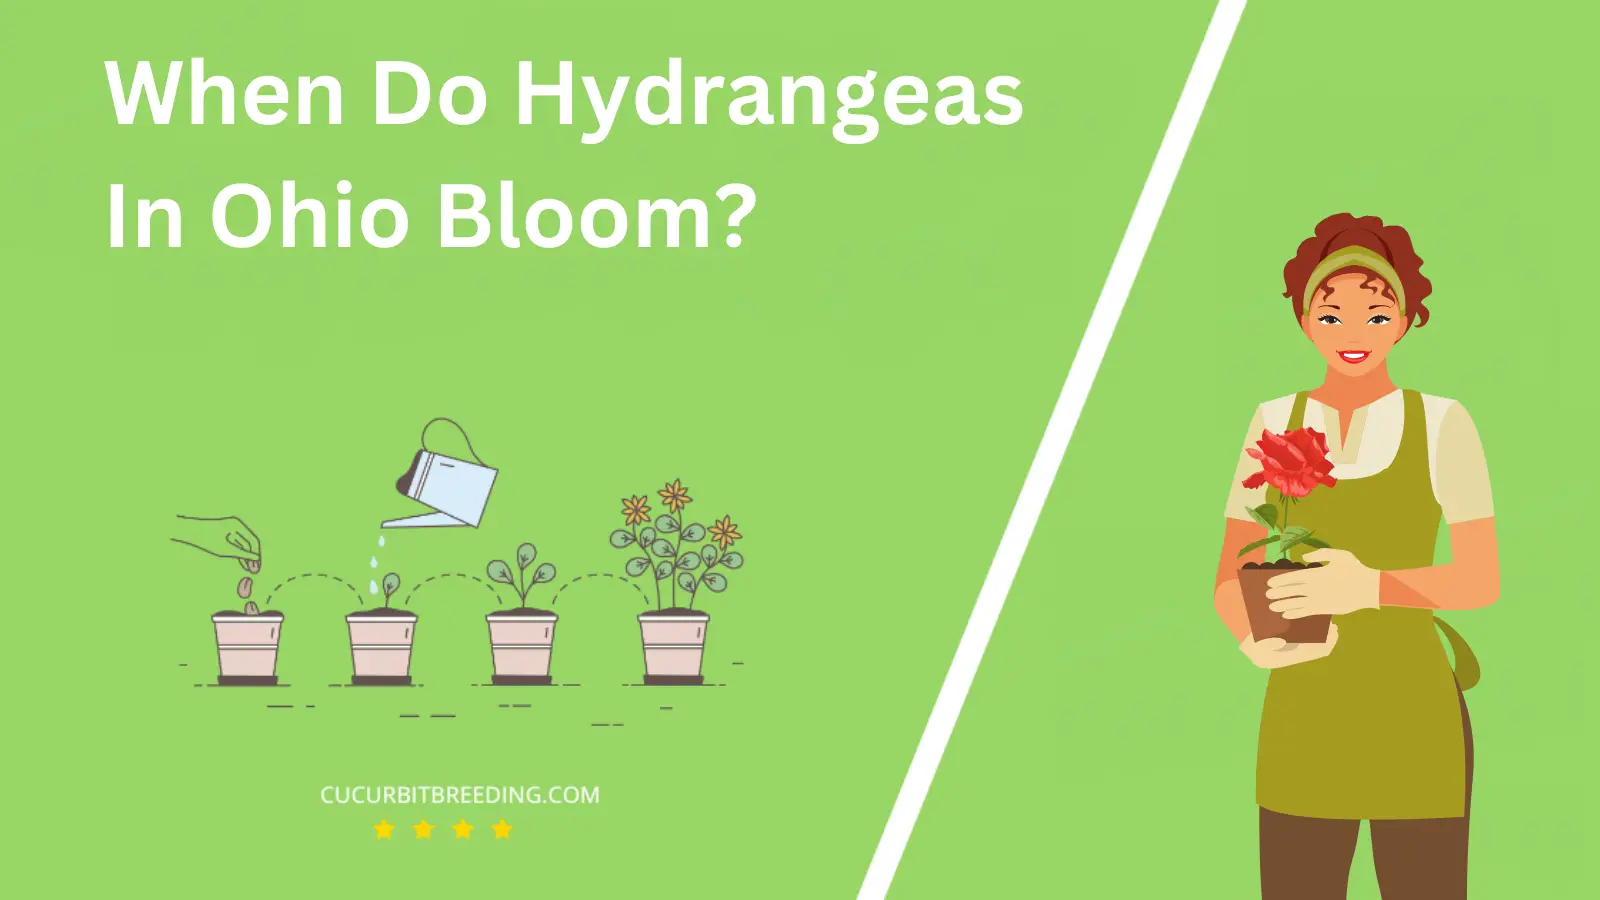 When Do Hydrangeas In Ohio Bloom?